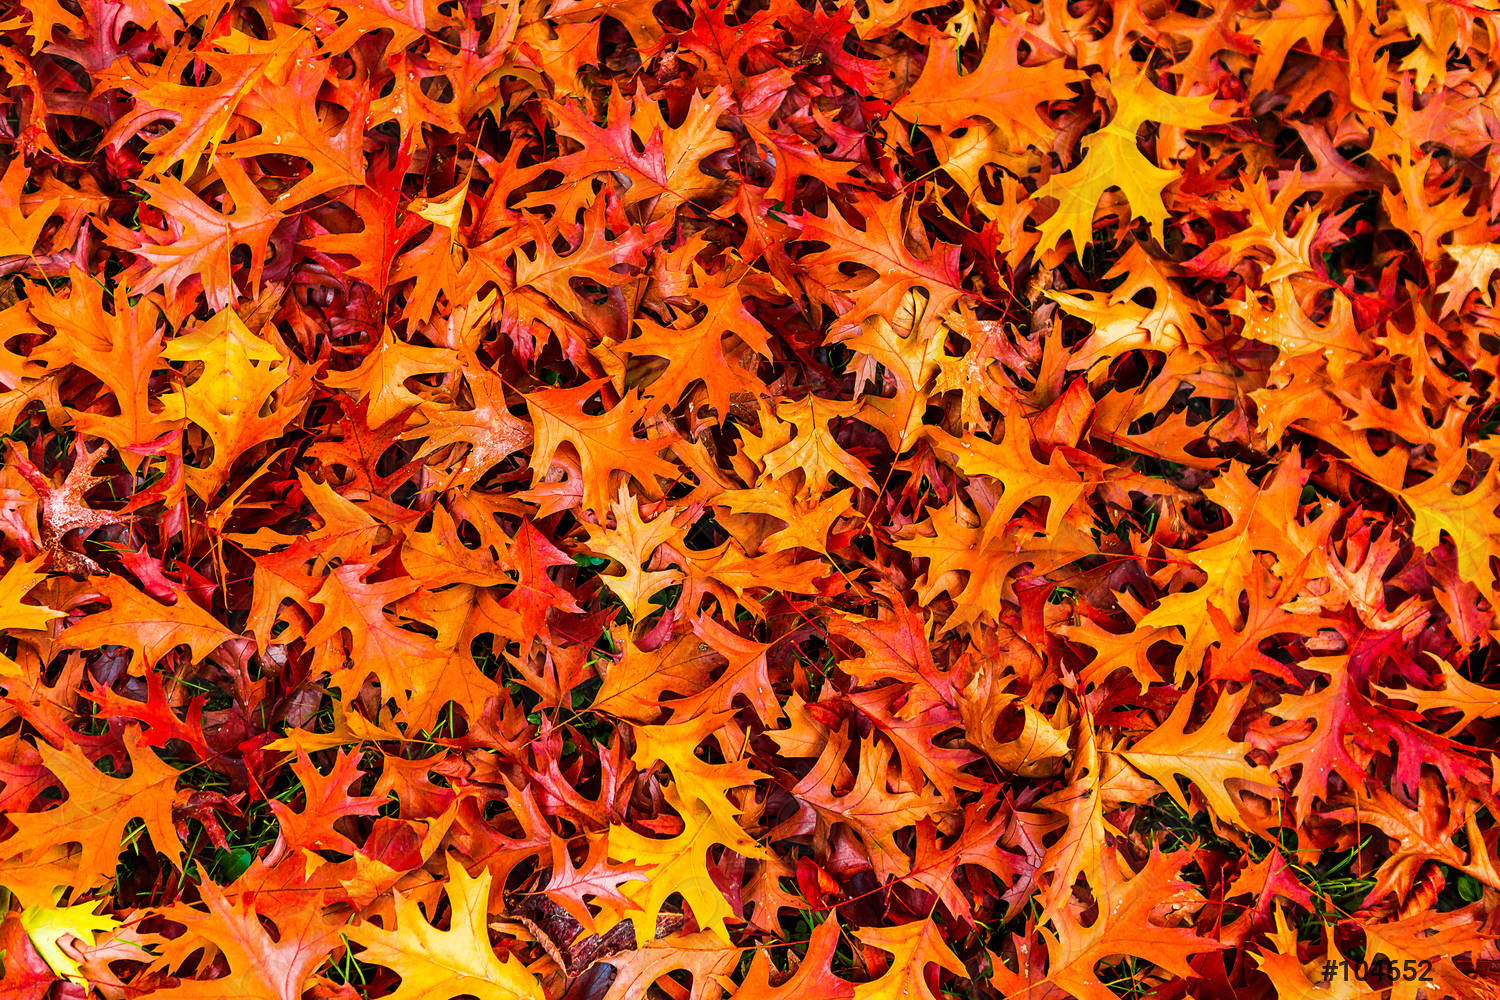 Golden Autumn leaf wallpaper pattern background